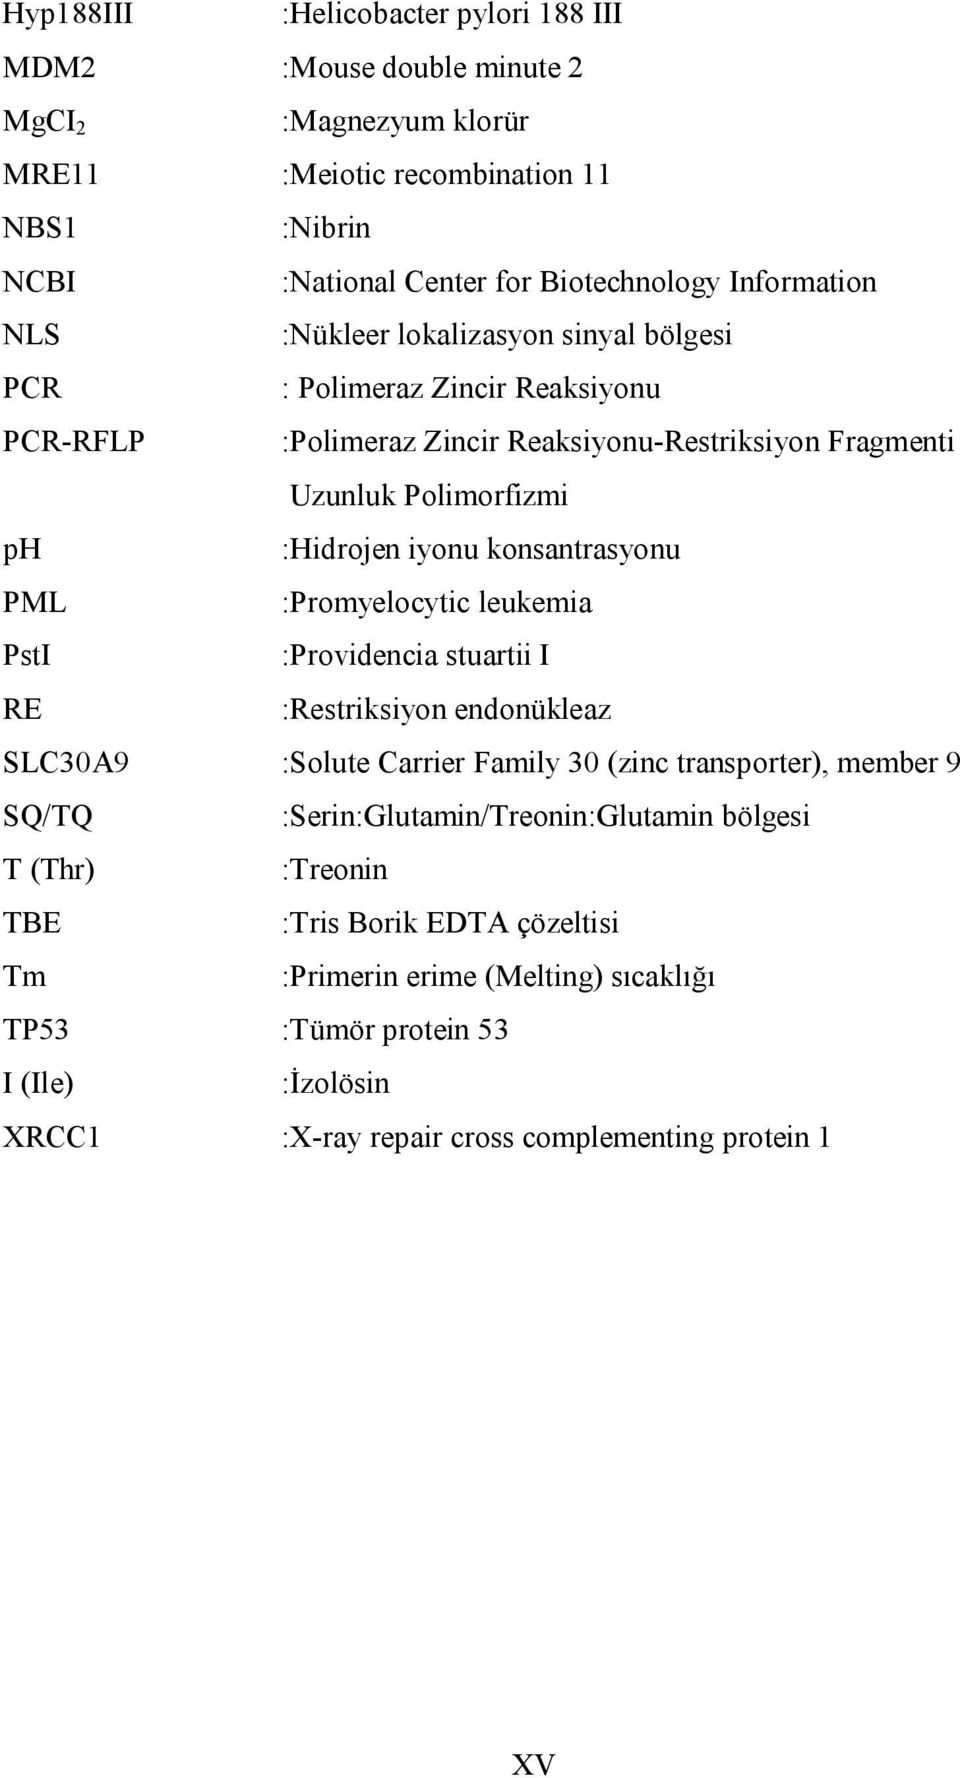 konsantrasyonu PML :Promyelocytic leukemia PstI :Providencia stuartii I RE :Restriksiyon endonükleaz SLC30A9 :Solute Carrier Family 30 (zinc transporter), member 9 SQ/TQ